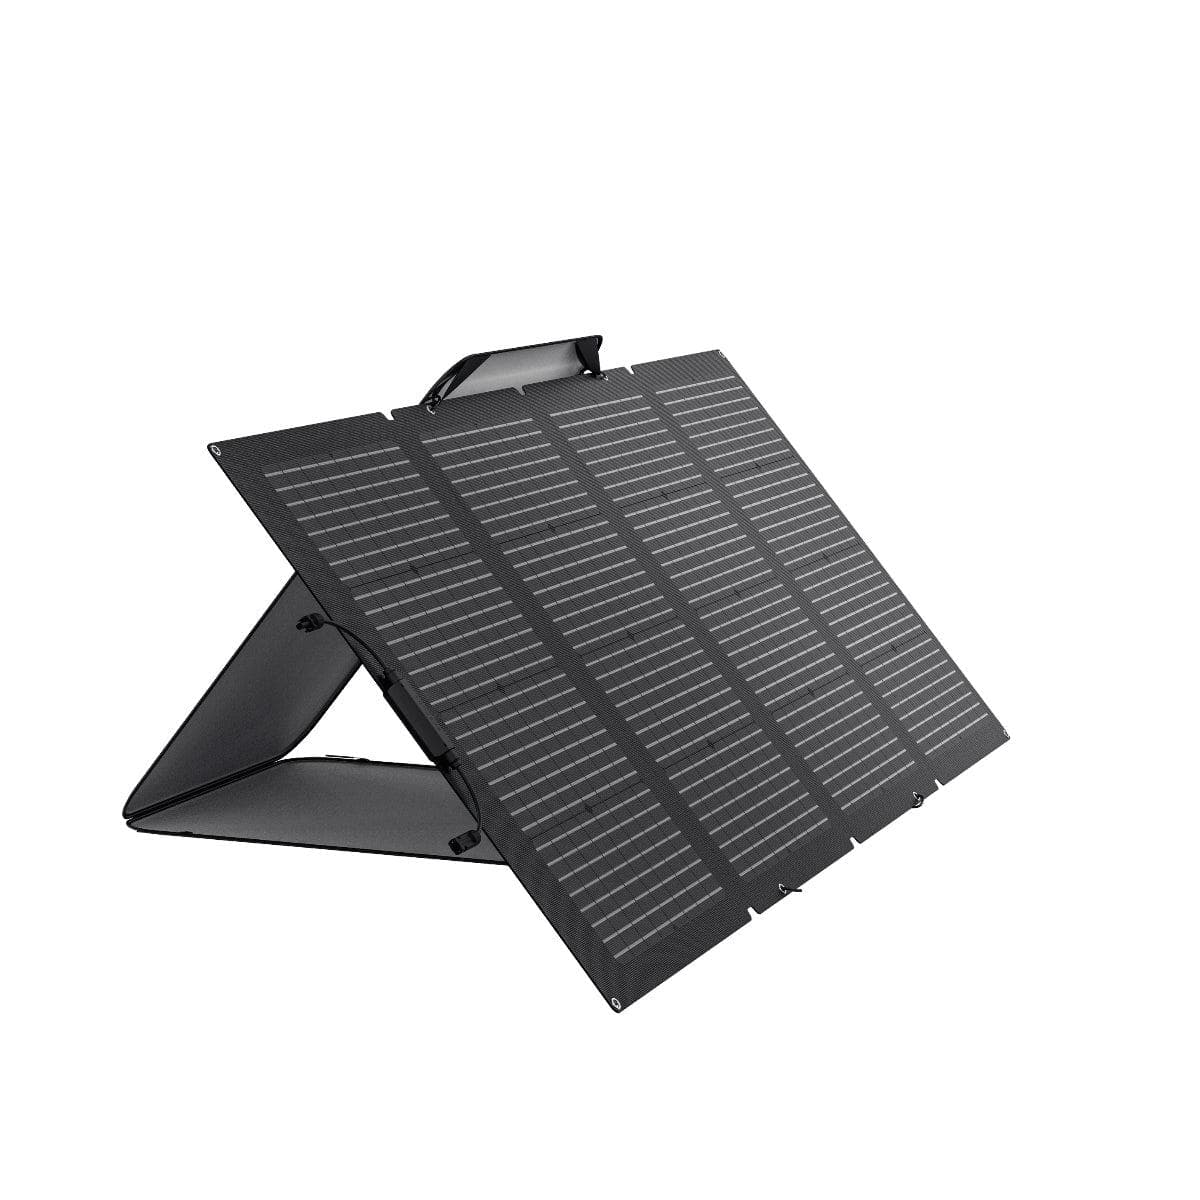 EcoFlow River Pro + 1x 220W Solar Panel Solar Generator Kit